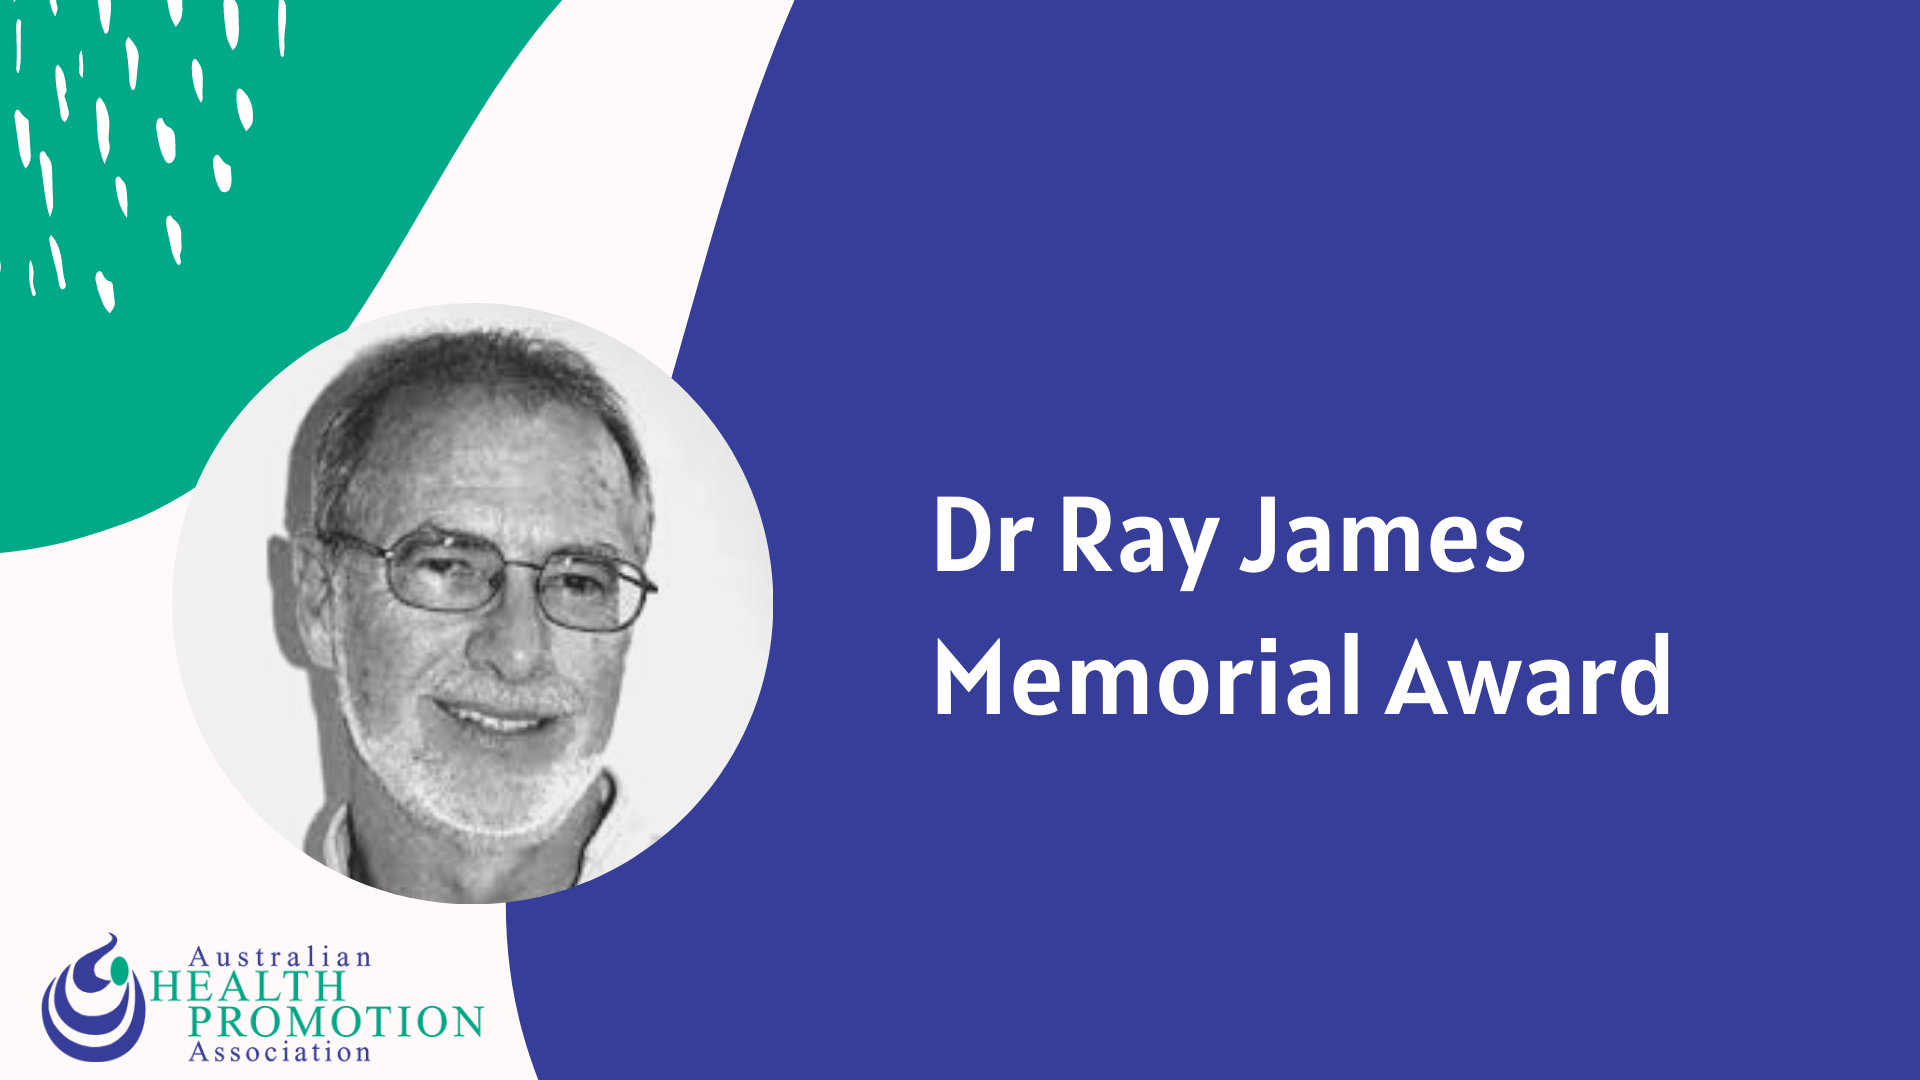 Dr Ray James Memorial Award 2021